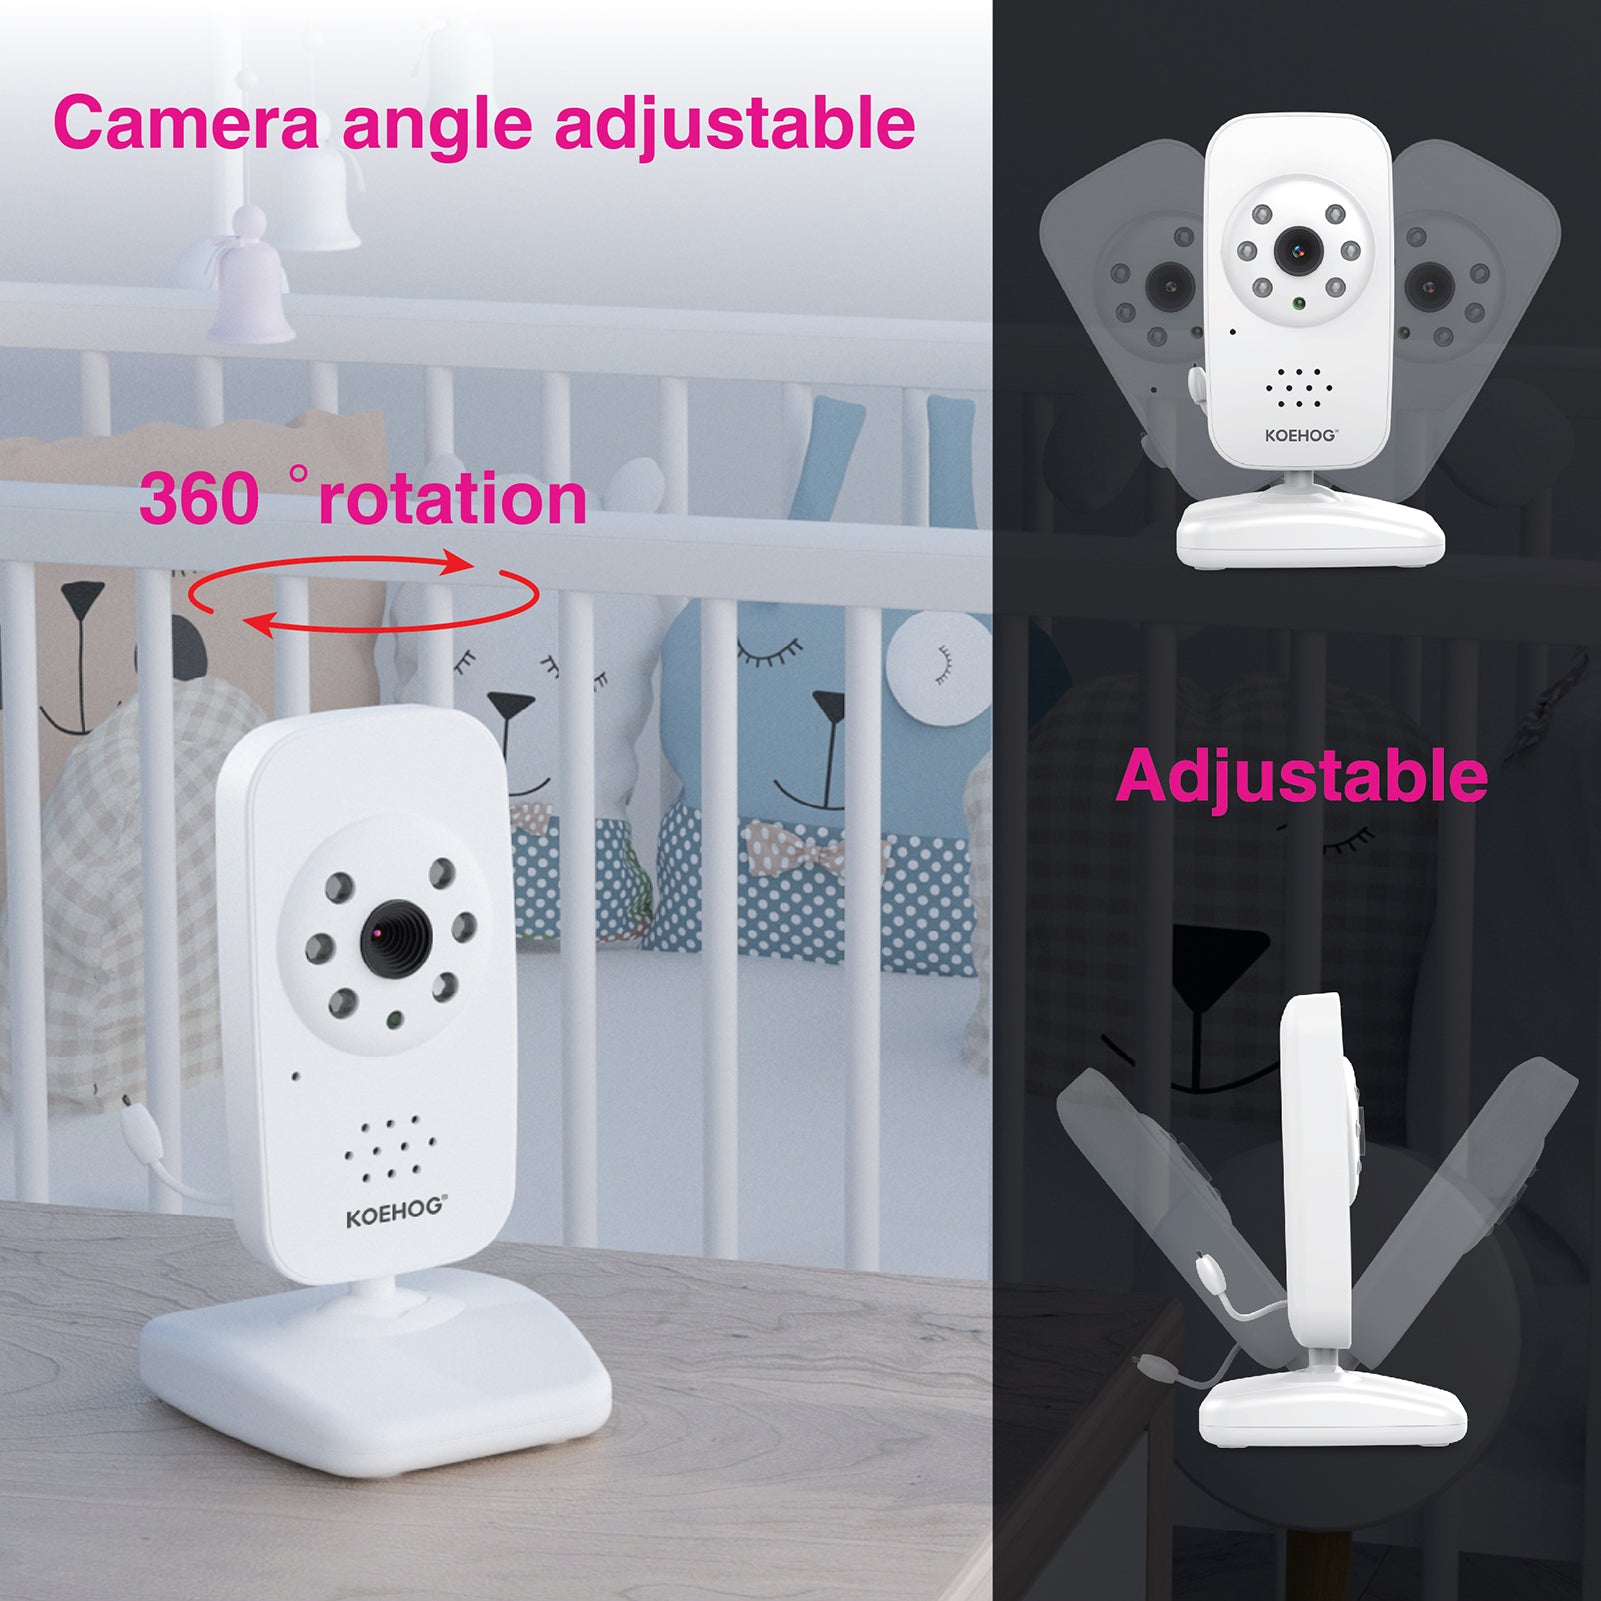 KOEHOG	E622 Video Baby Monitor